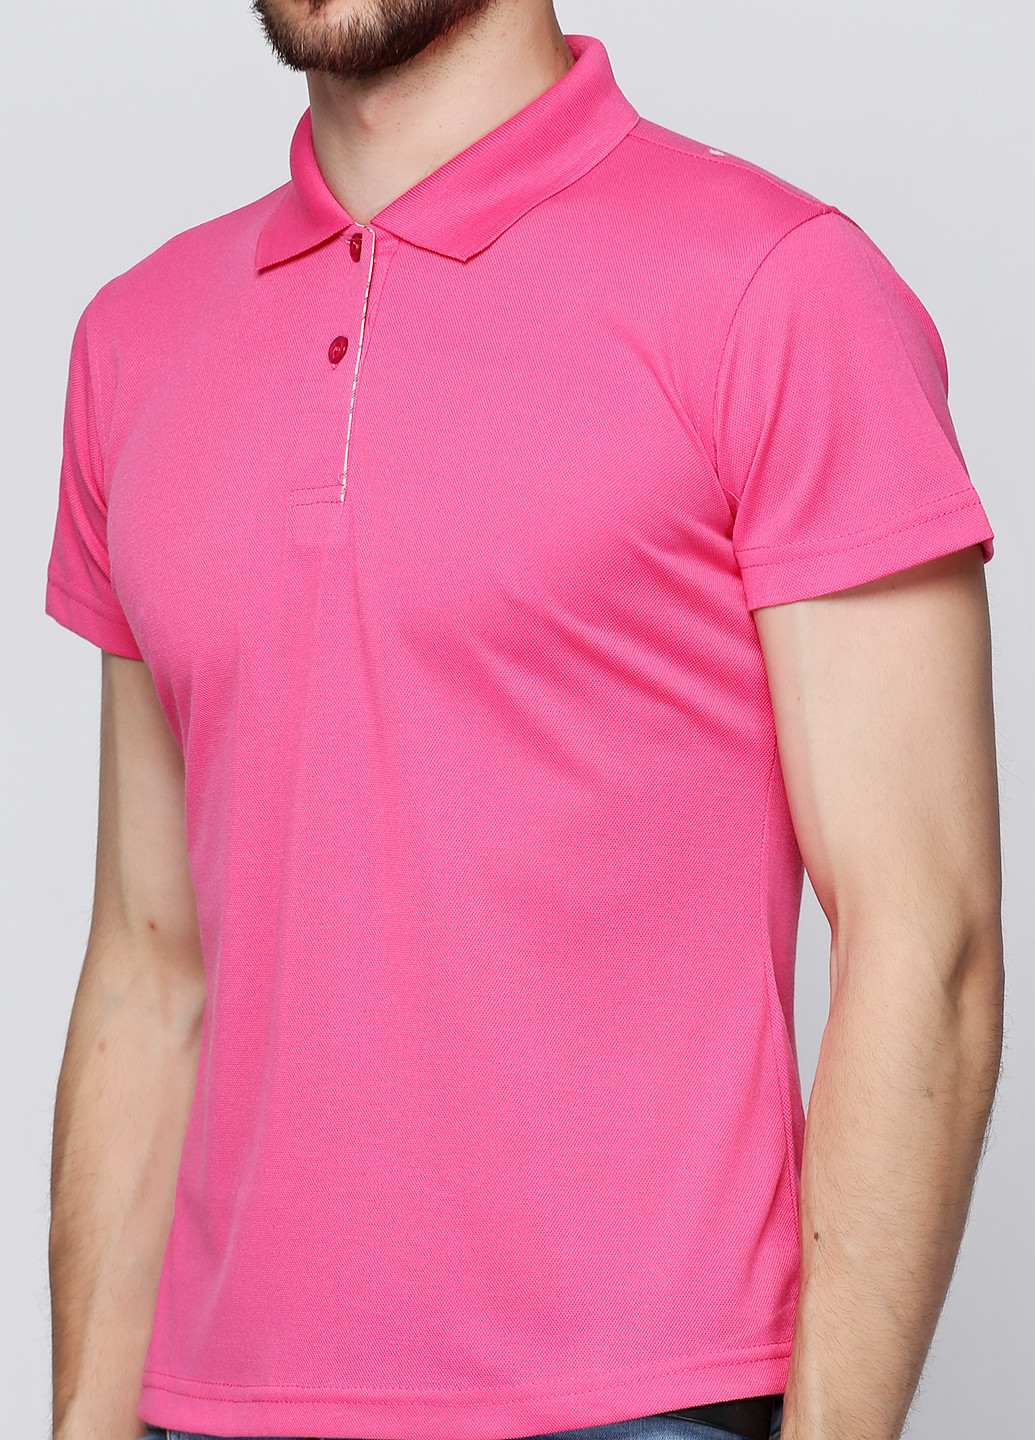 Розовая футболка-поло для мужчин SOT однотонная